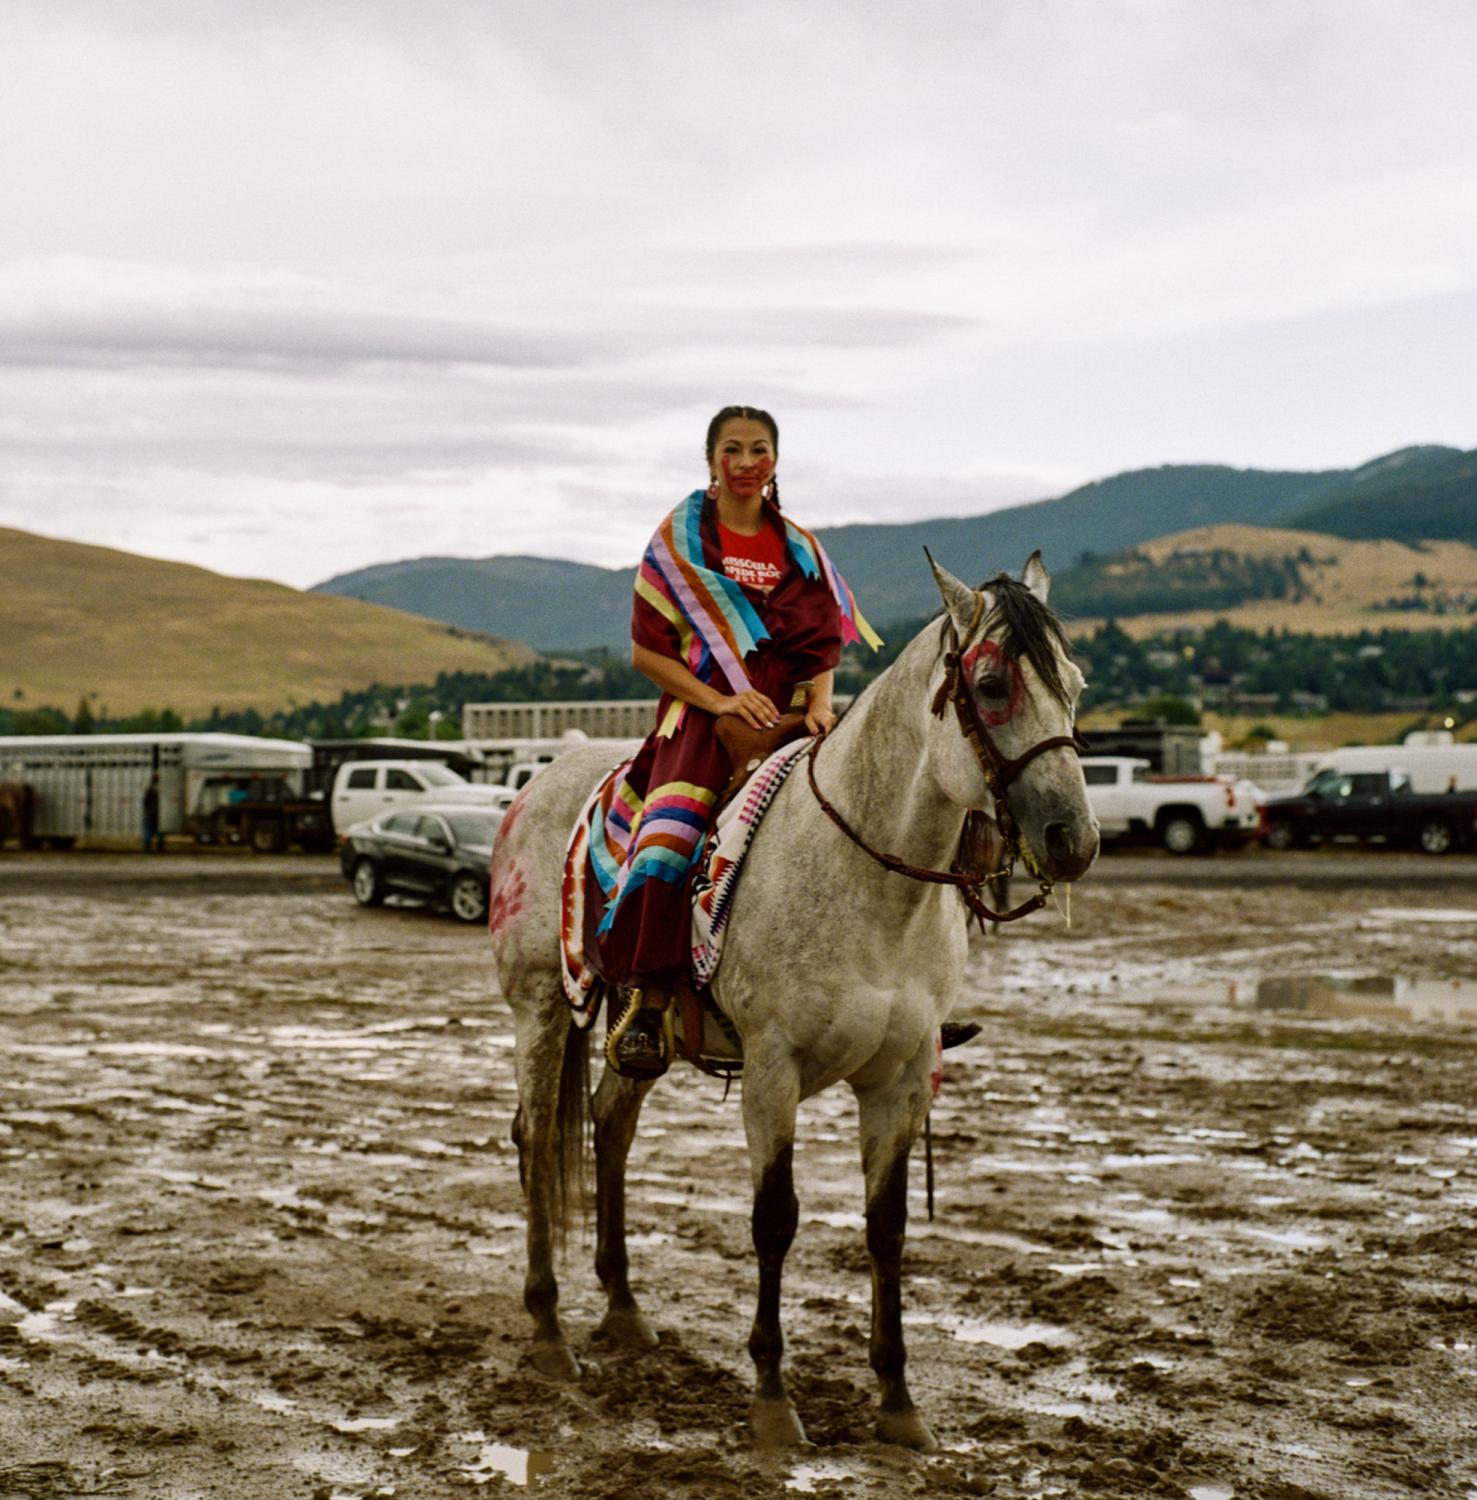 Single images - Kiana Simonson rides on horseback to raise awareness...